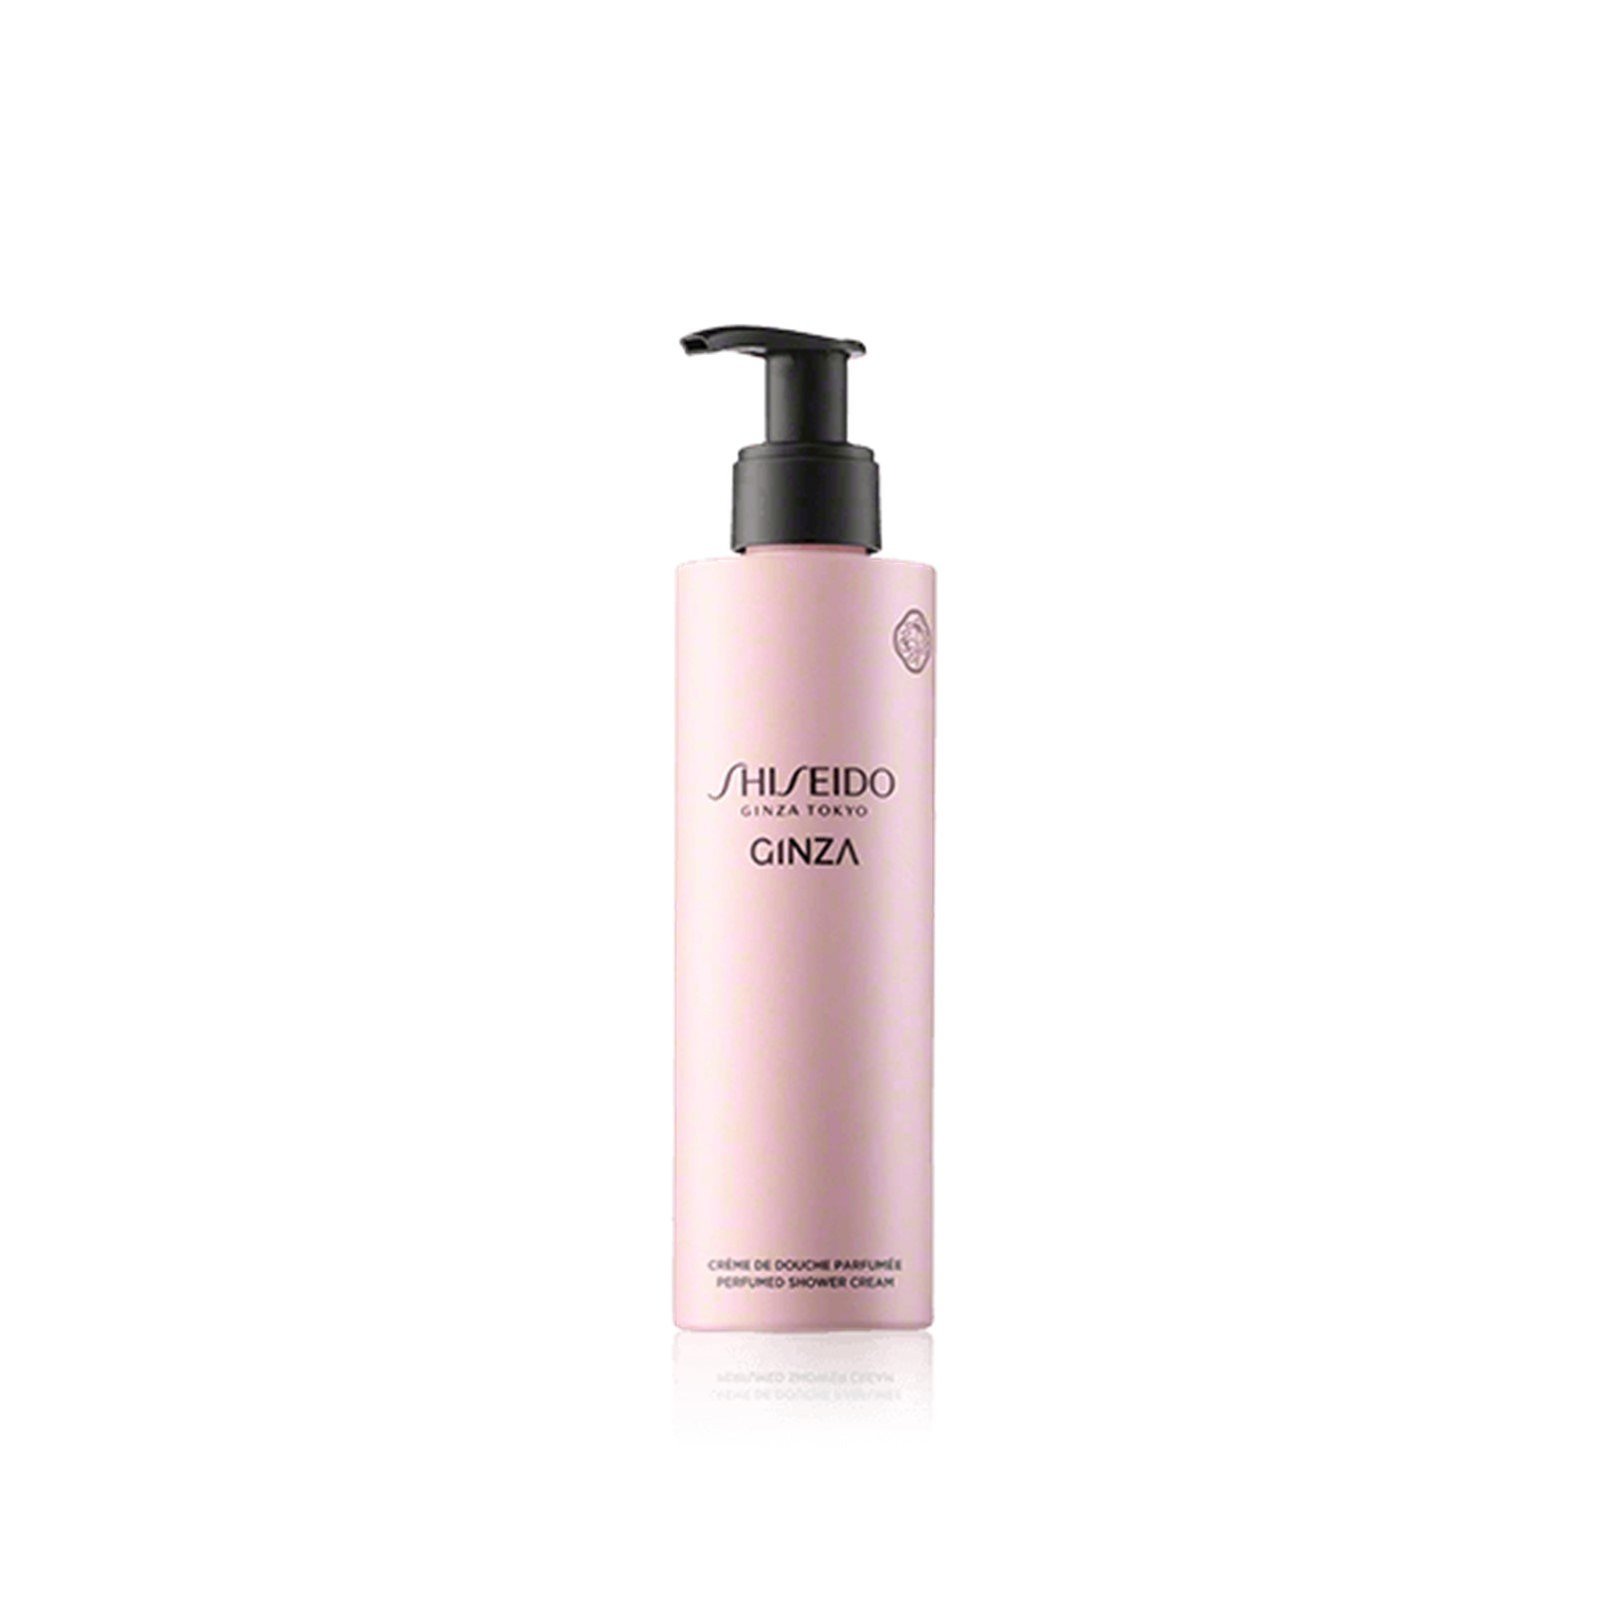 Shiseido Ginza Perfumed Shower Cream 200ml